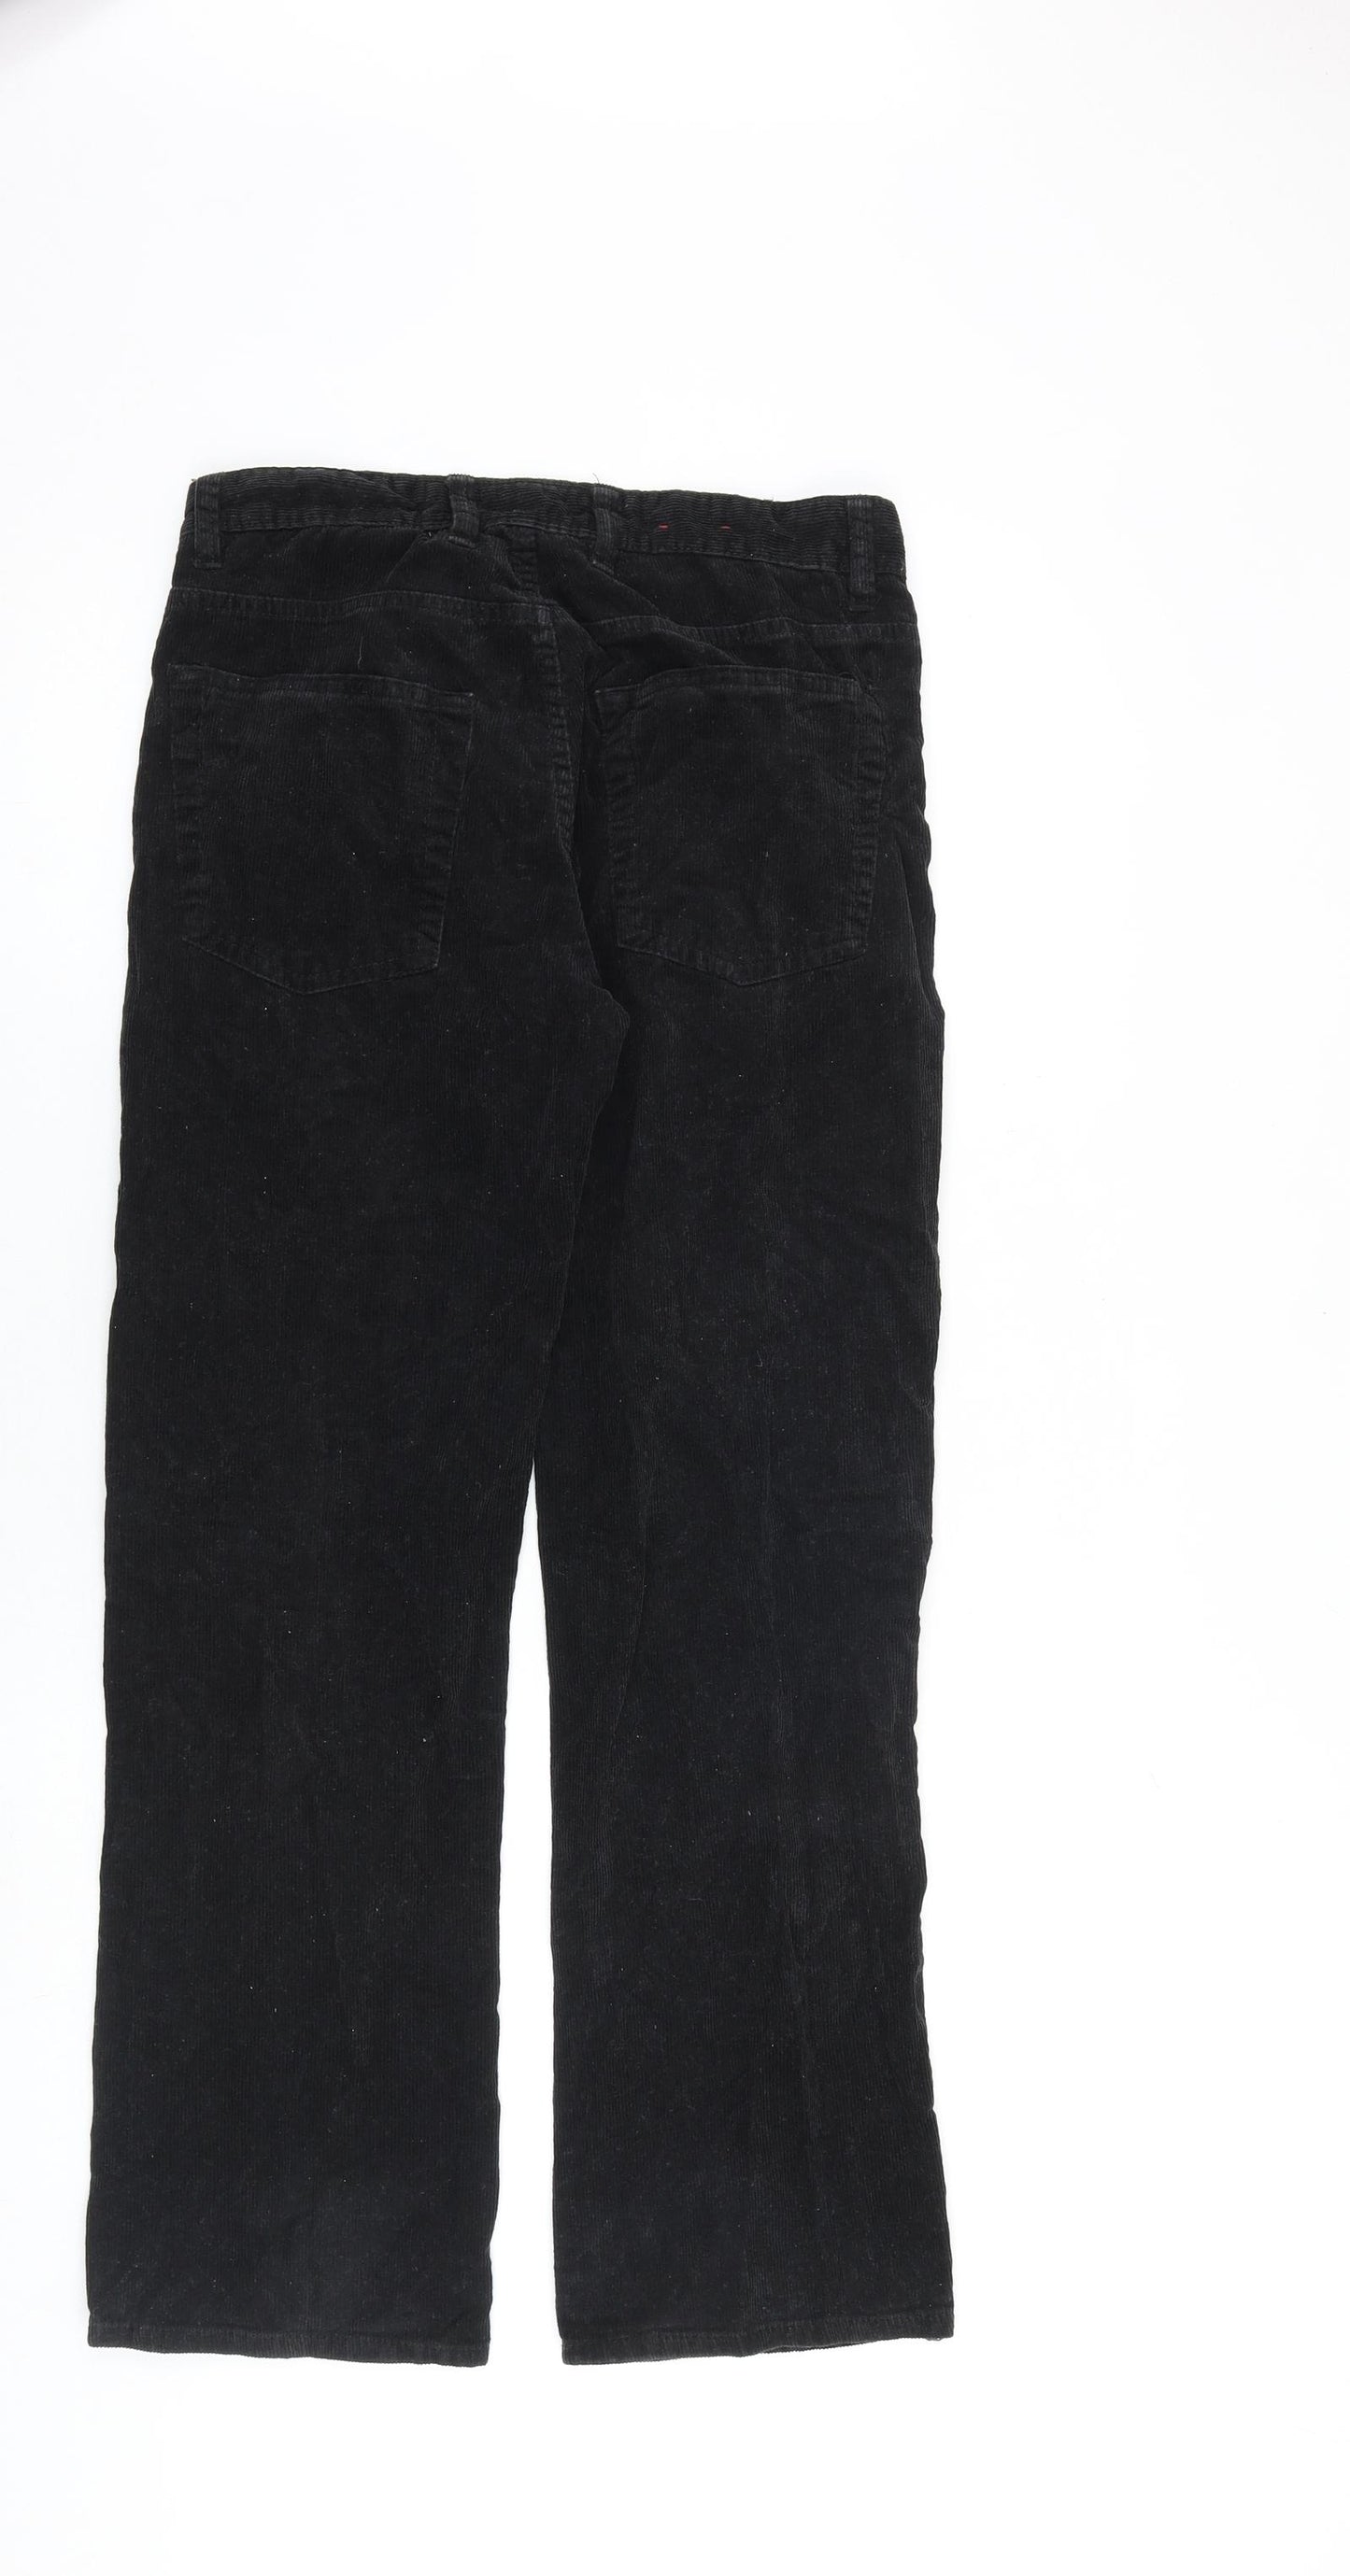 Easy Denim Mens Black Cotton Trousers Size 30 in L30 in Regular Zip